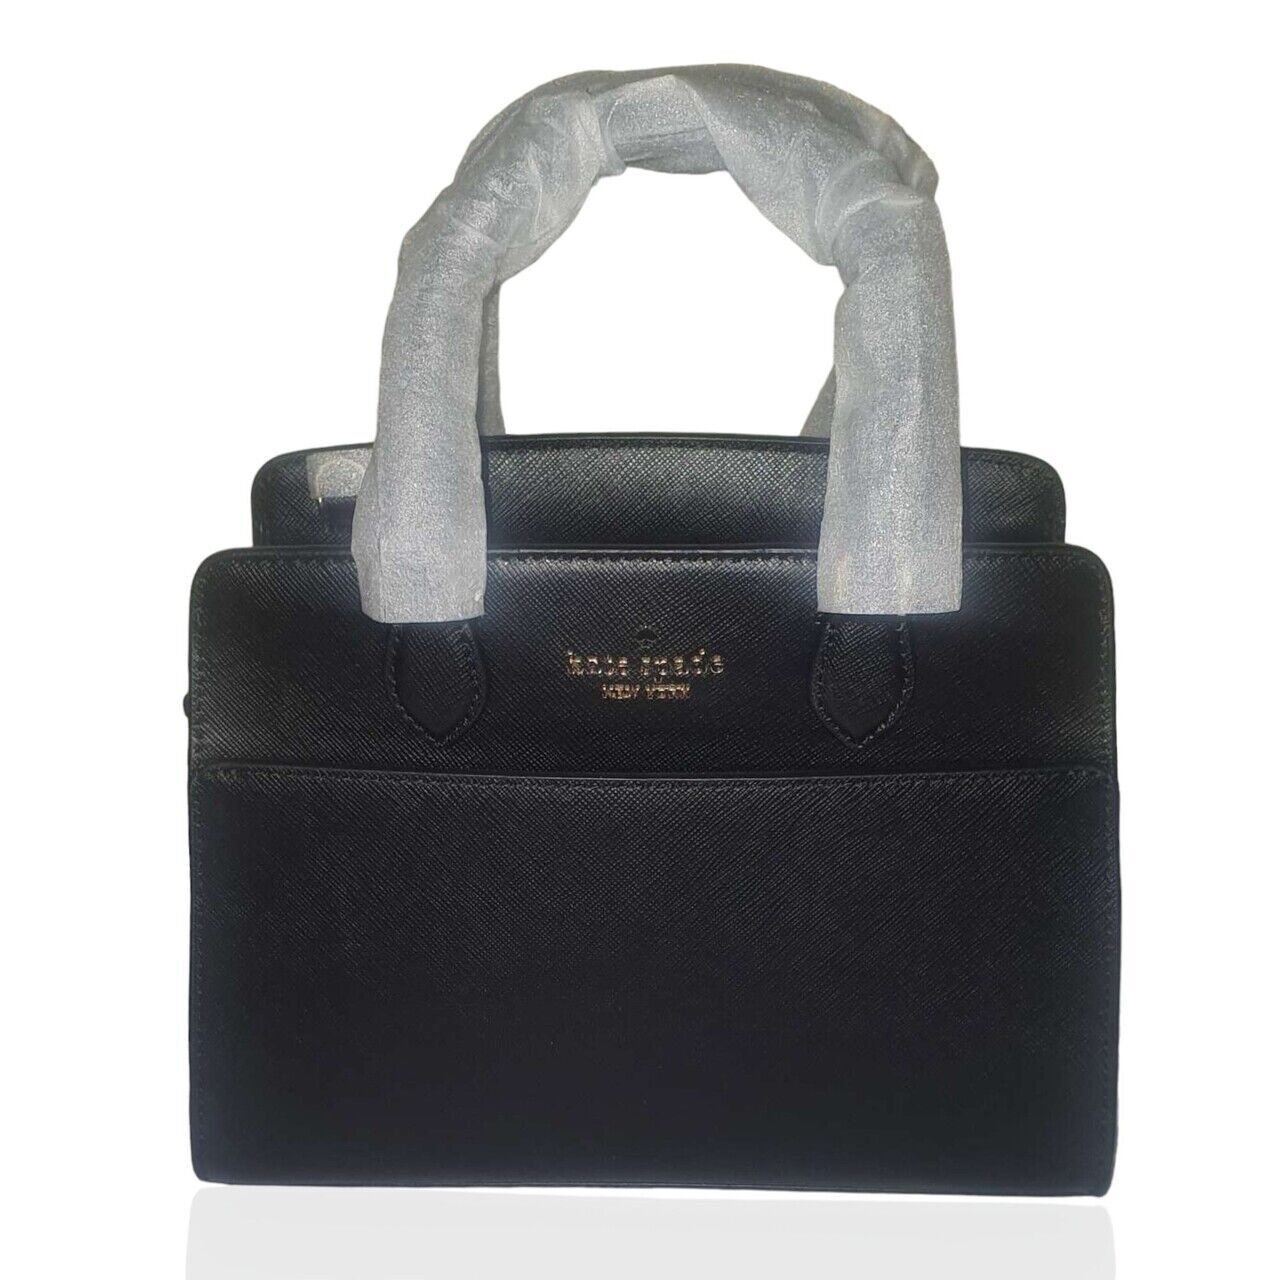 Kate Spade New York Black Handbag